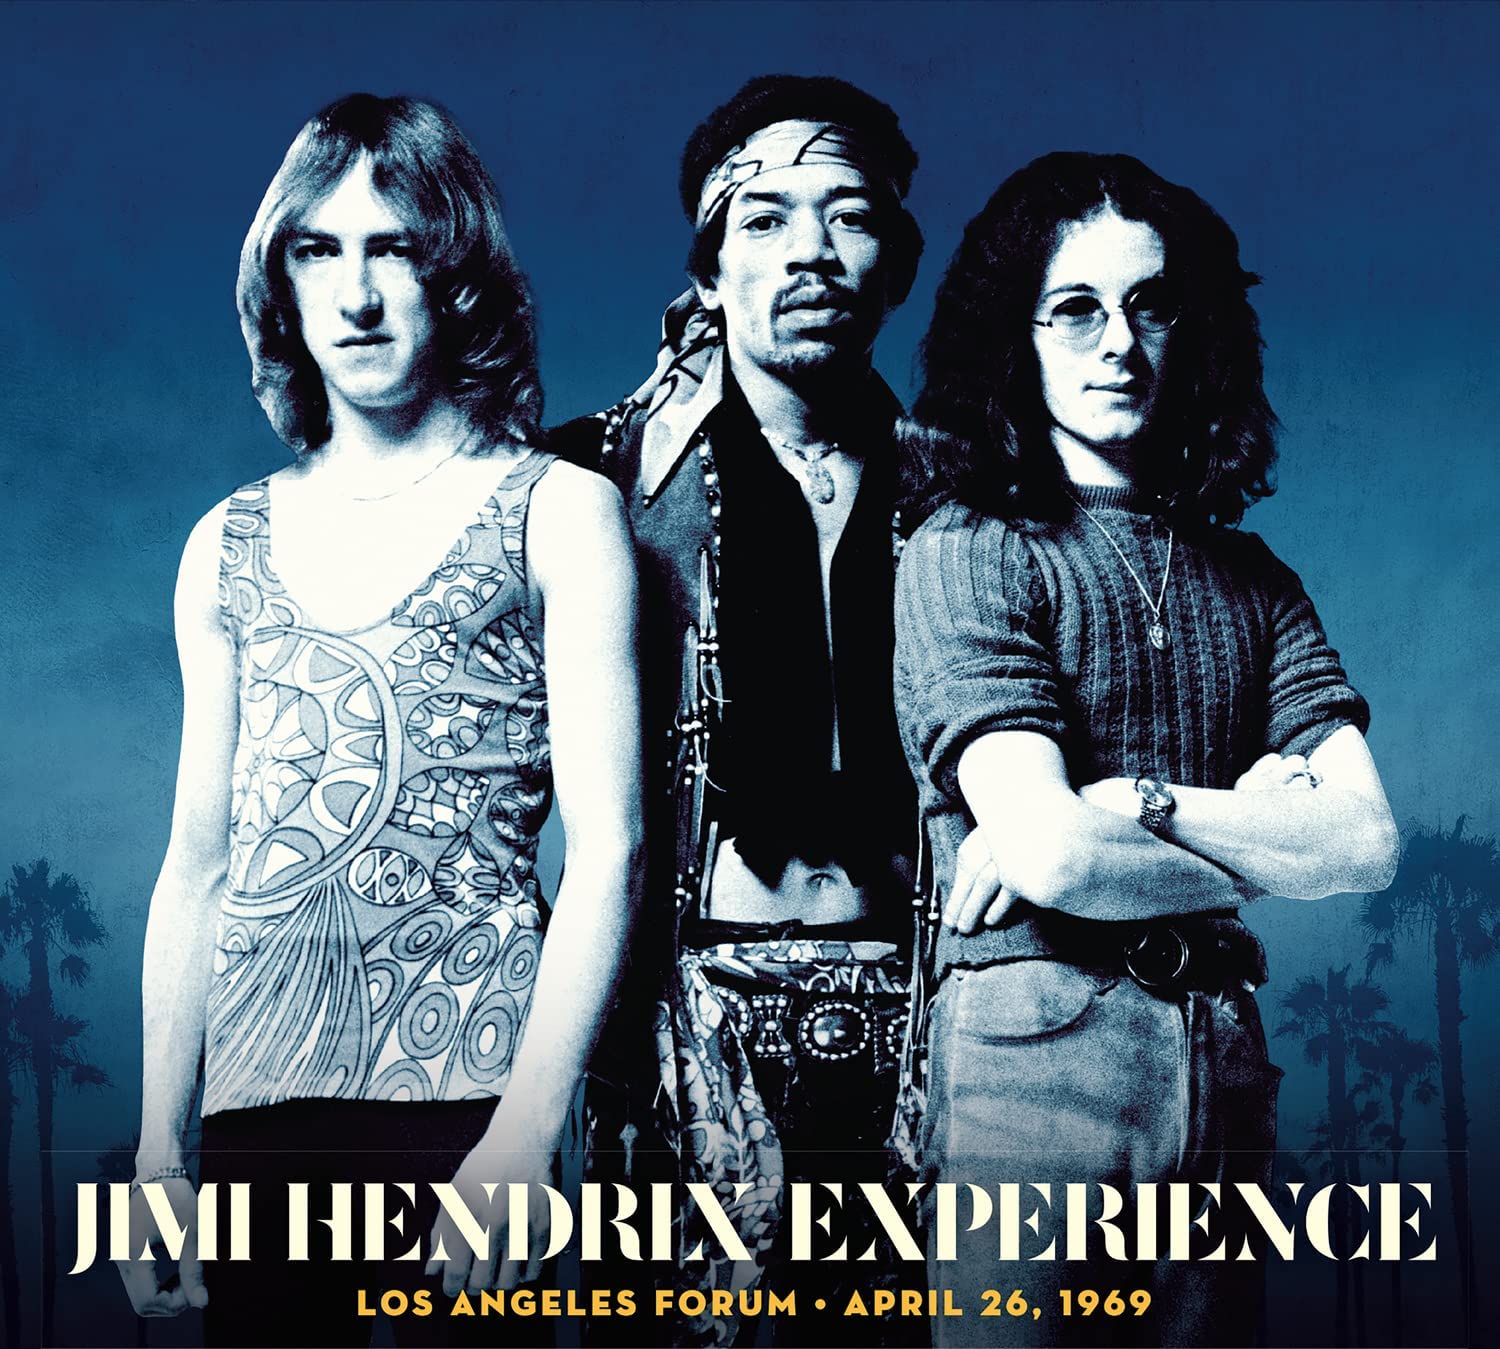 Hendrix, Jimi -experience Los Angeles Forum - April 26, 1969